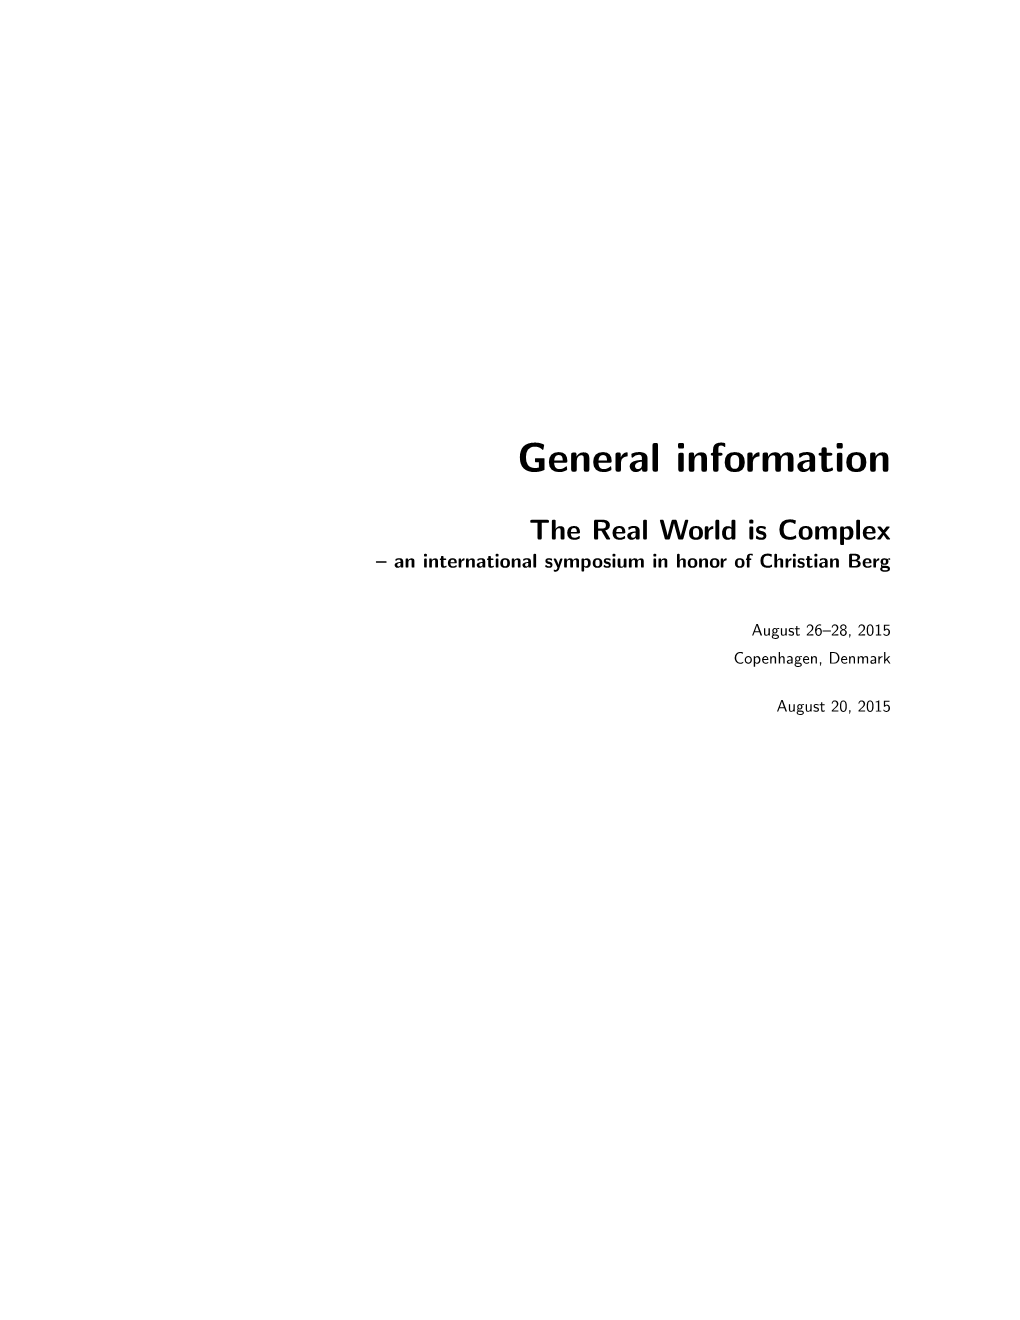 General Information (Pdf)